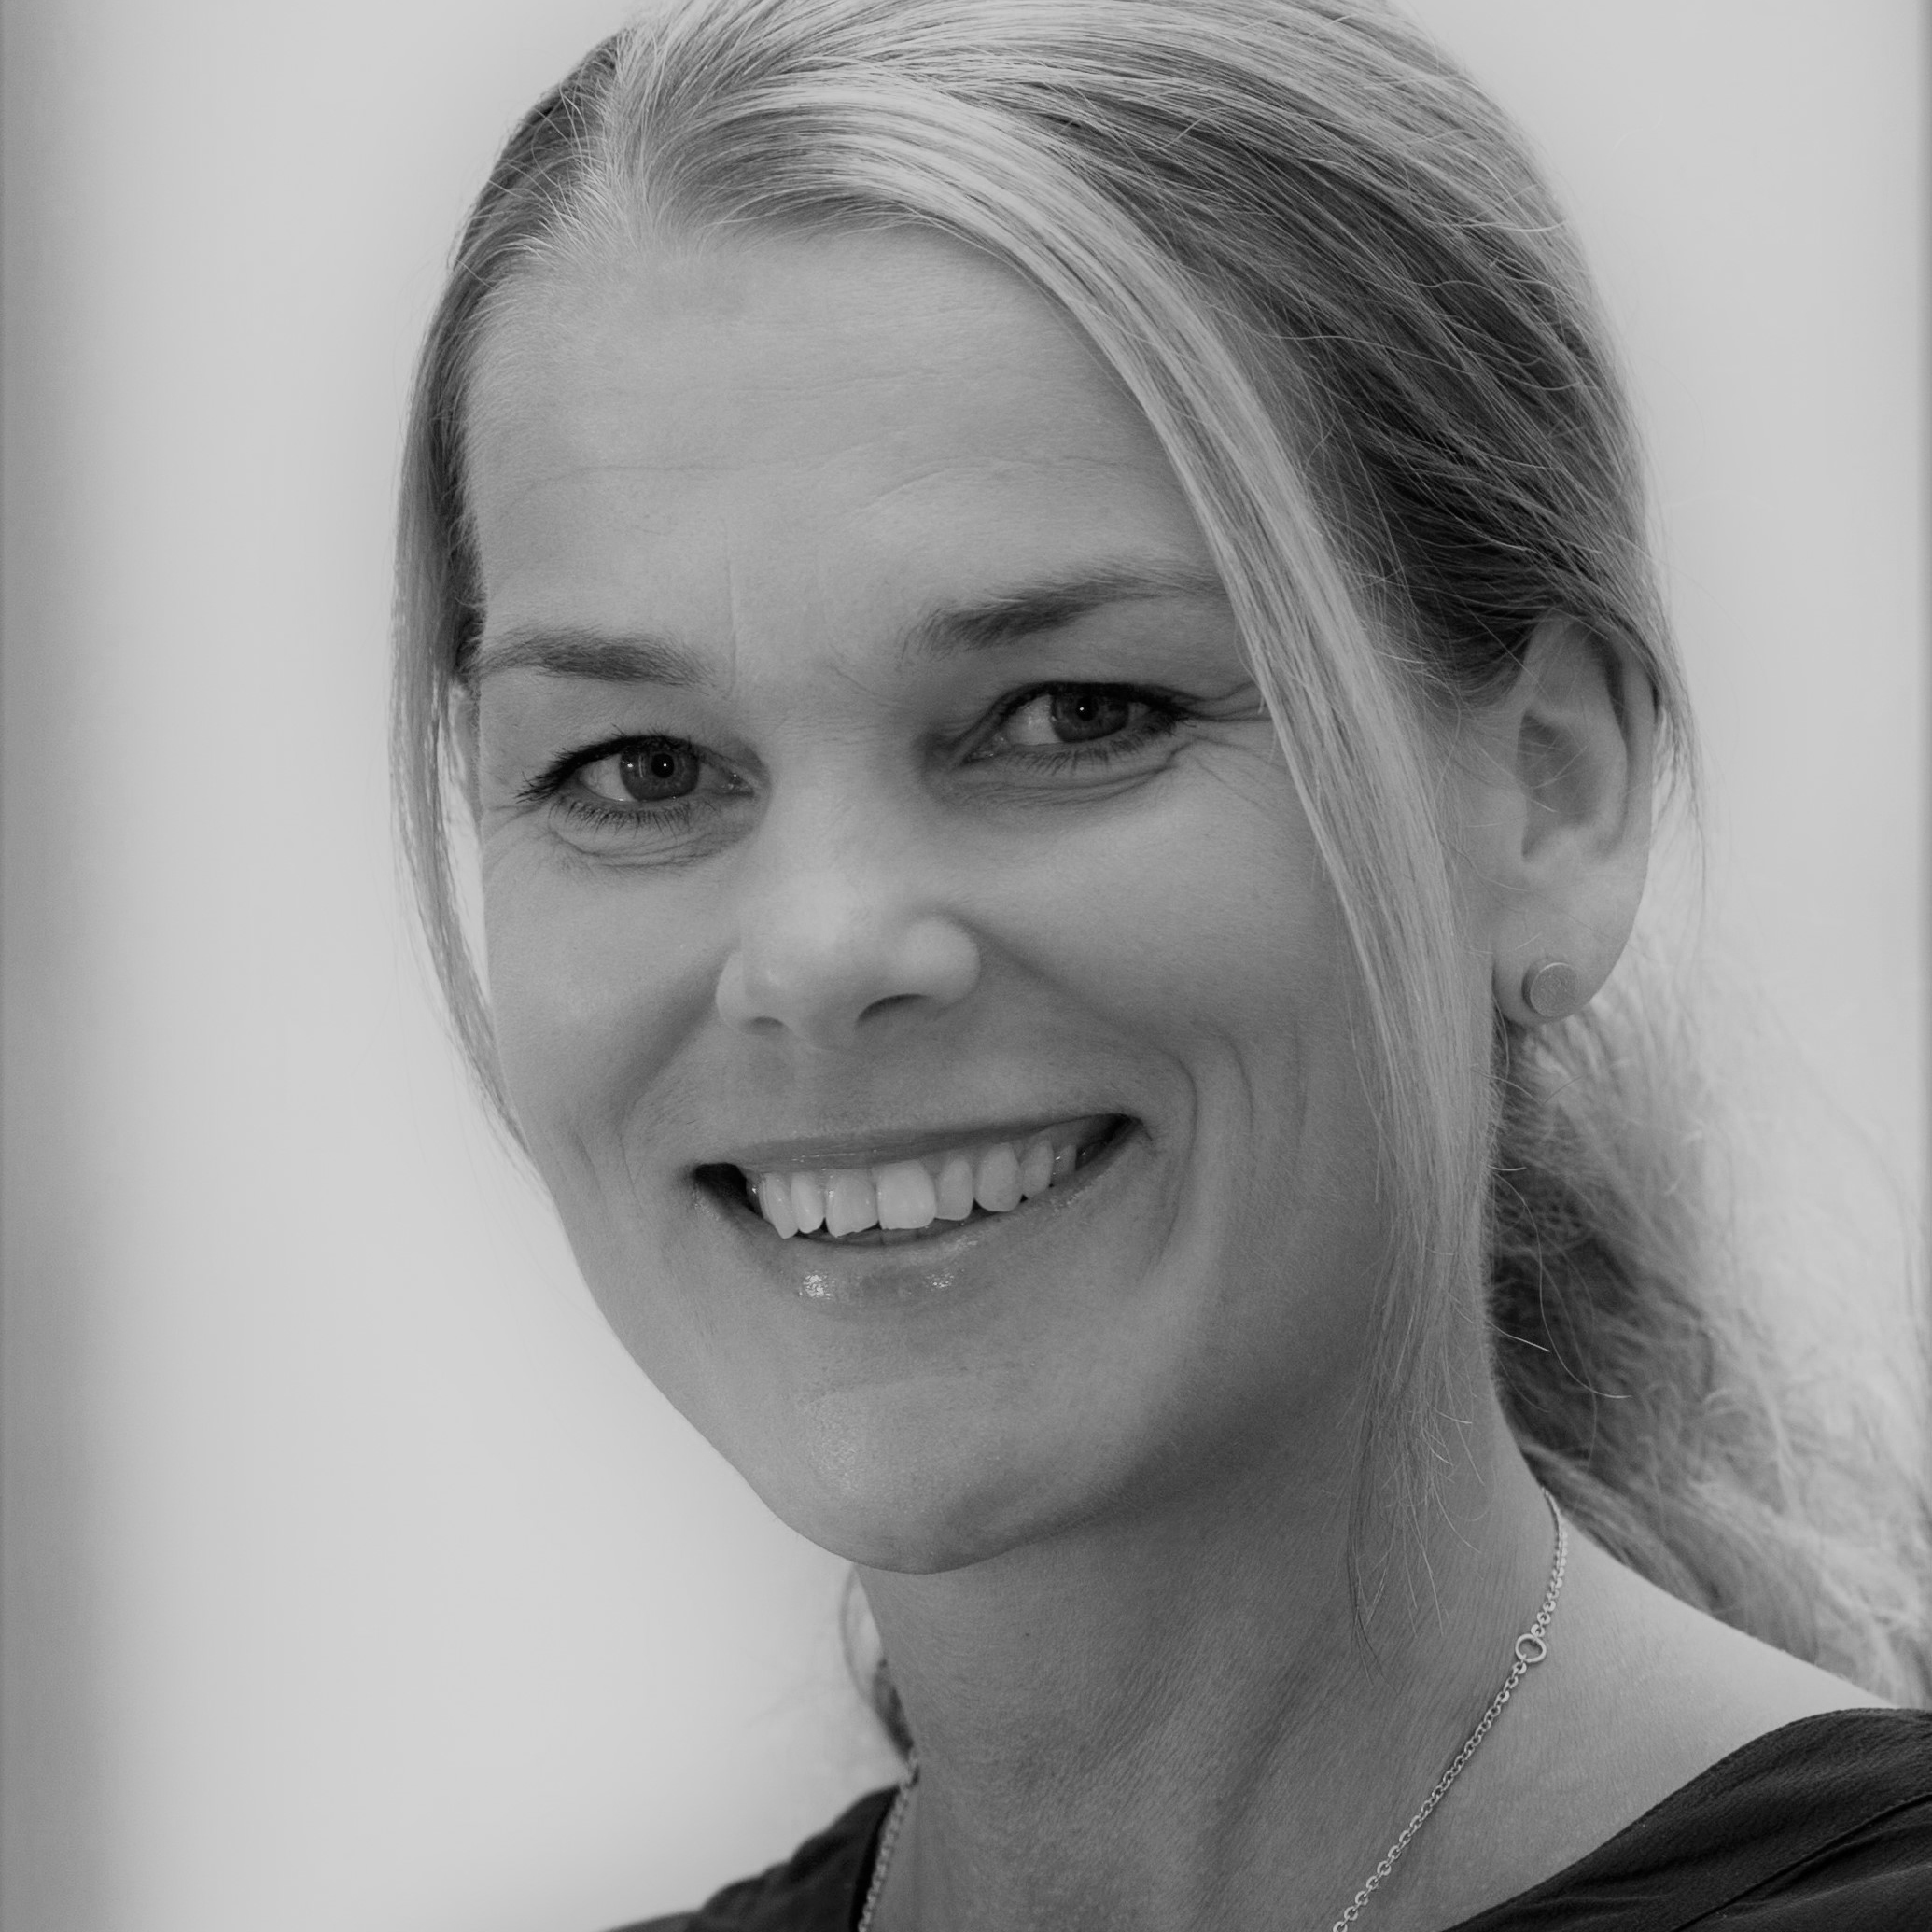 Susanne Sandgren,  Processledare social hållbarhet/ folkhälsa och projektledare Fullföljda studier Skaraborg 2.0, <a title="Susanne Sandgren" href="mailto:susanne.sandgren@skaraborg.se">susanne.sandgren@skaraborg.se</a>